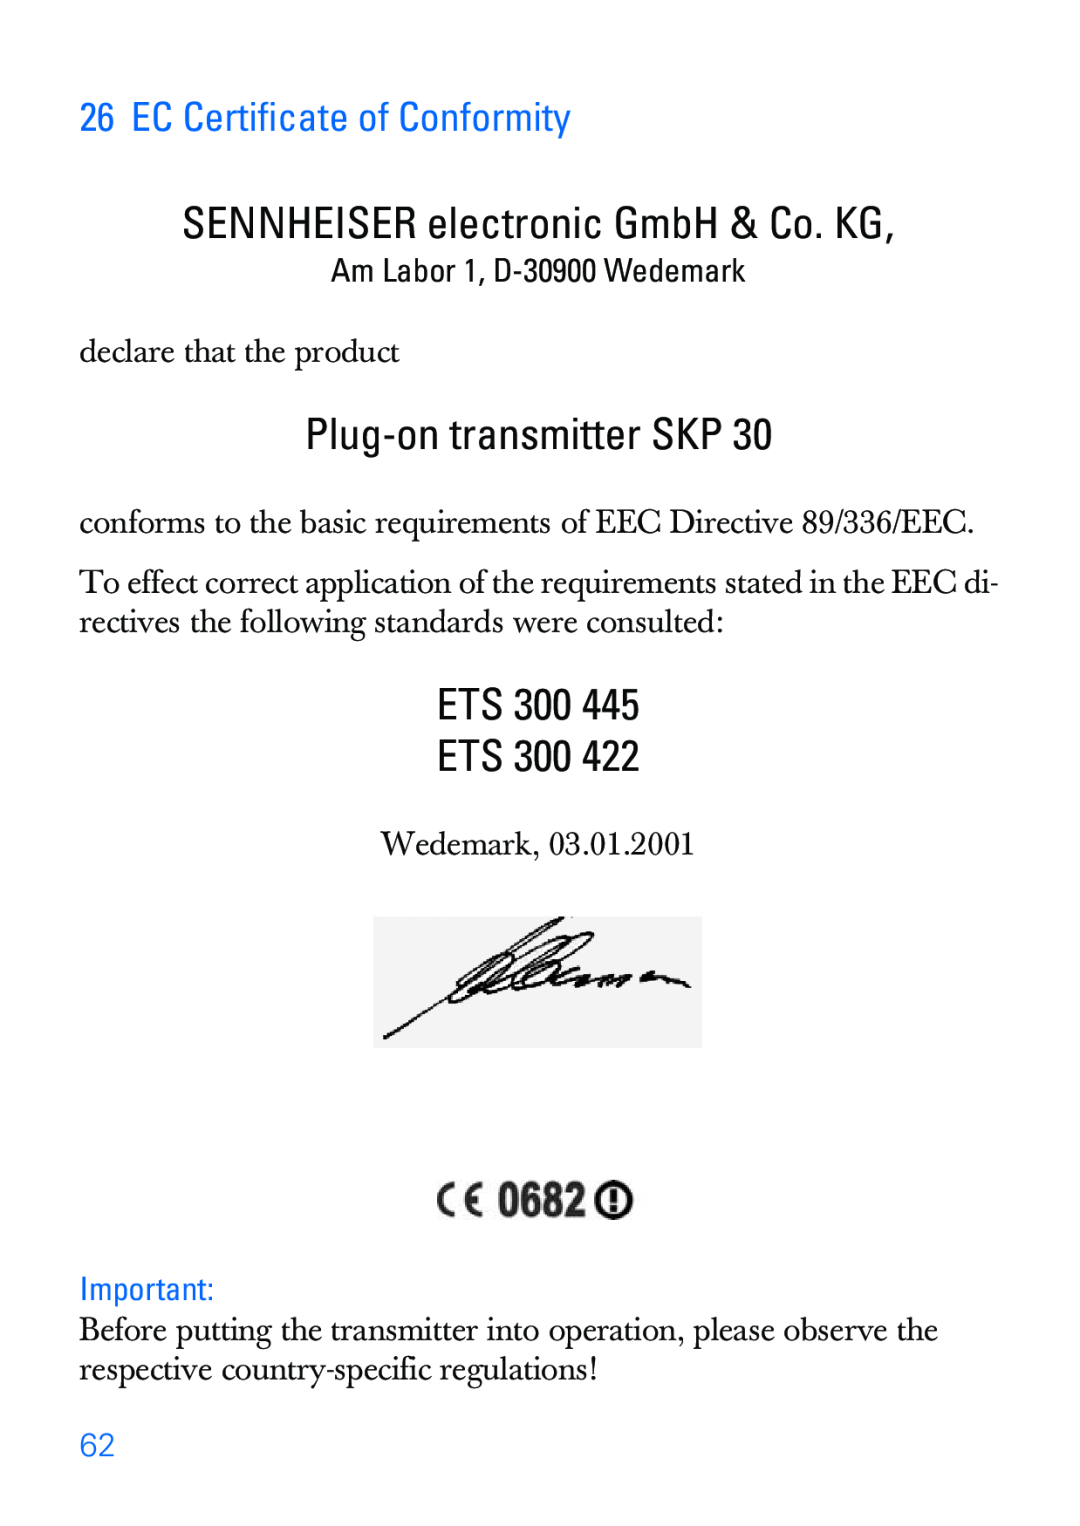 Sennheiser SKP 30 manual Plug-on transmitter SKP, EC Certiﬁcate of Conformity, SENNHEISER electronic GmbH & Co. KG 